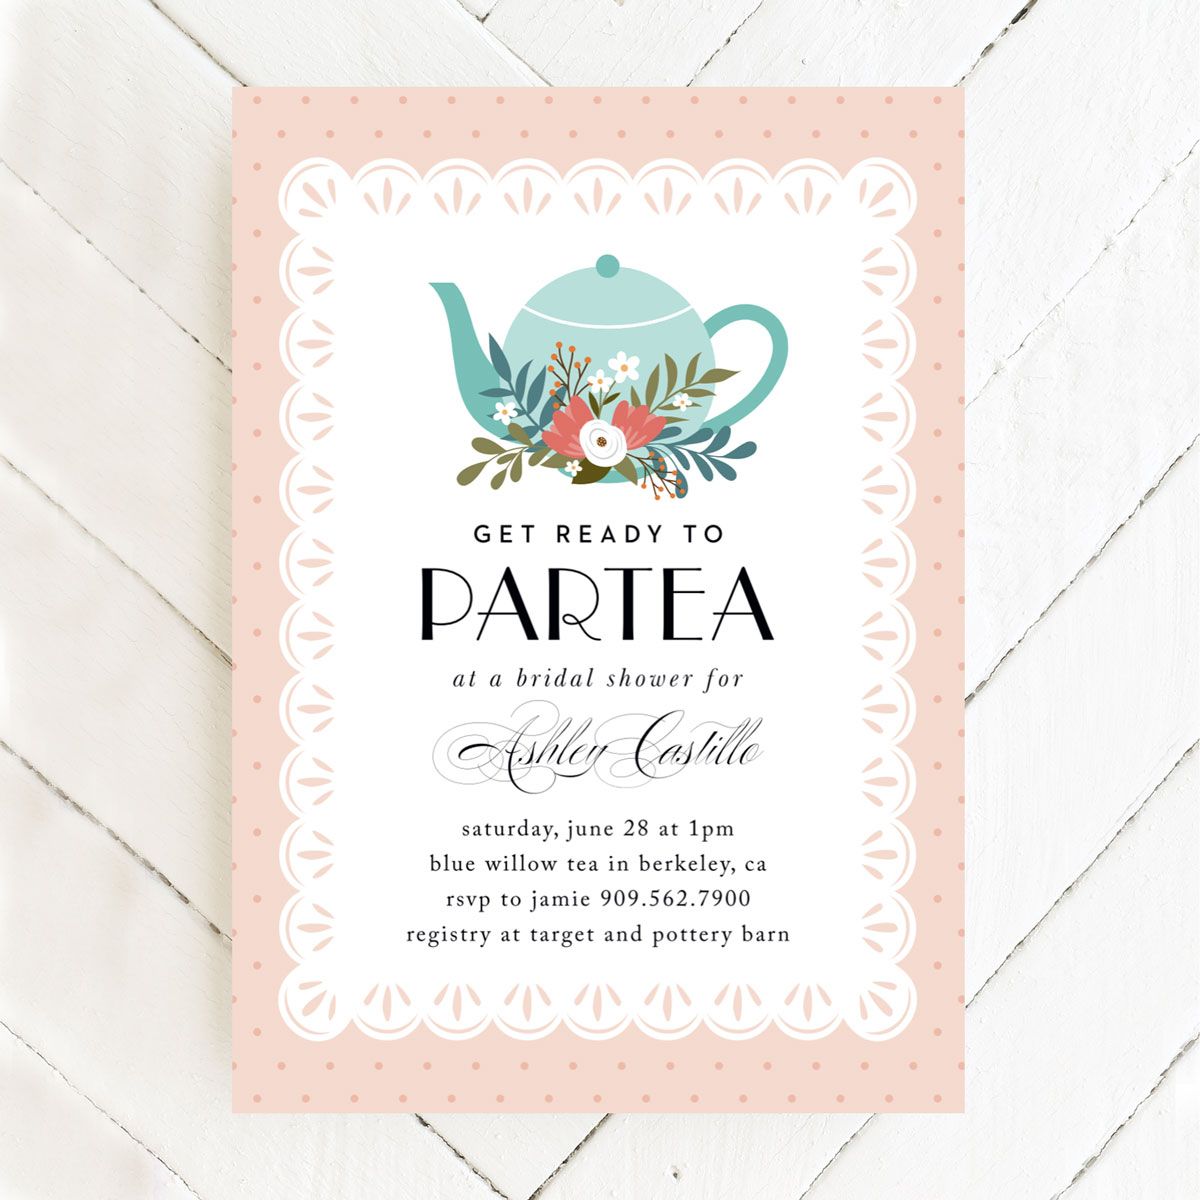 Partea Tea Party floral bridal shower invitation for moms by Basic Invite